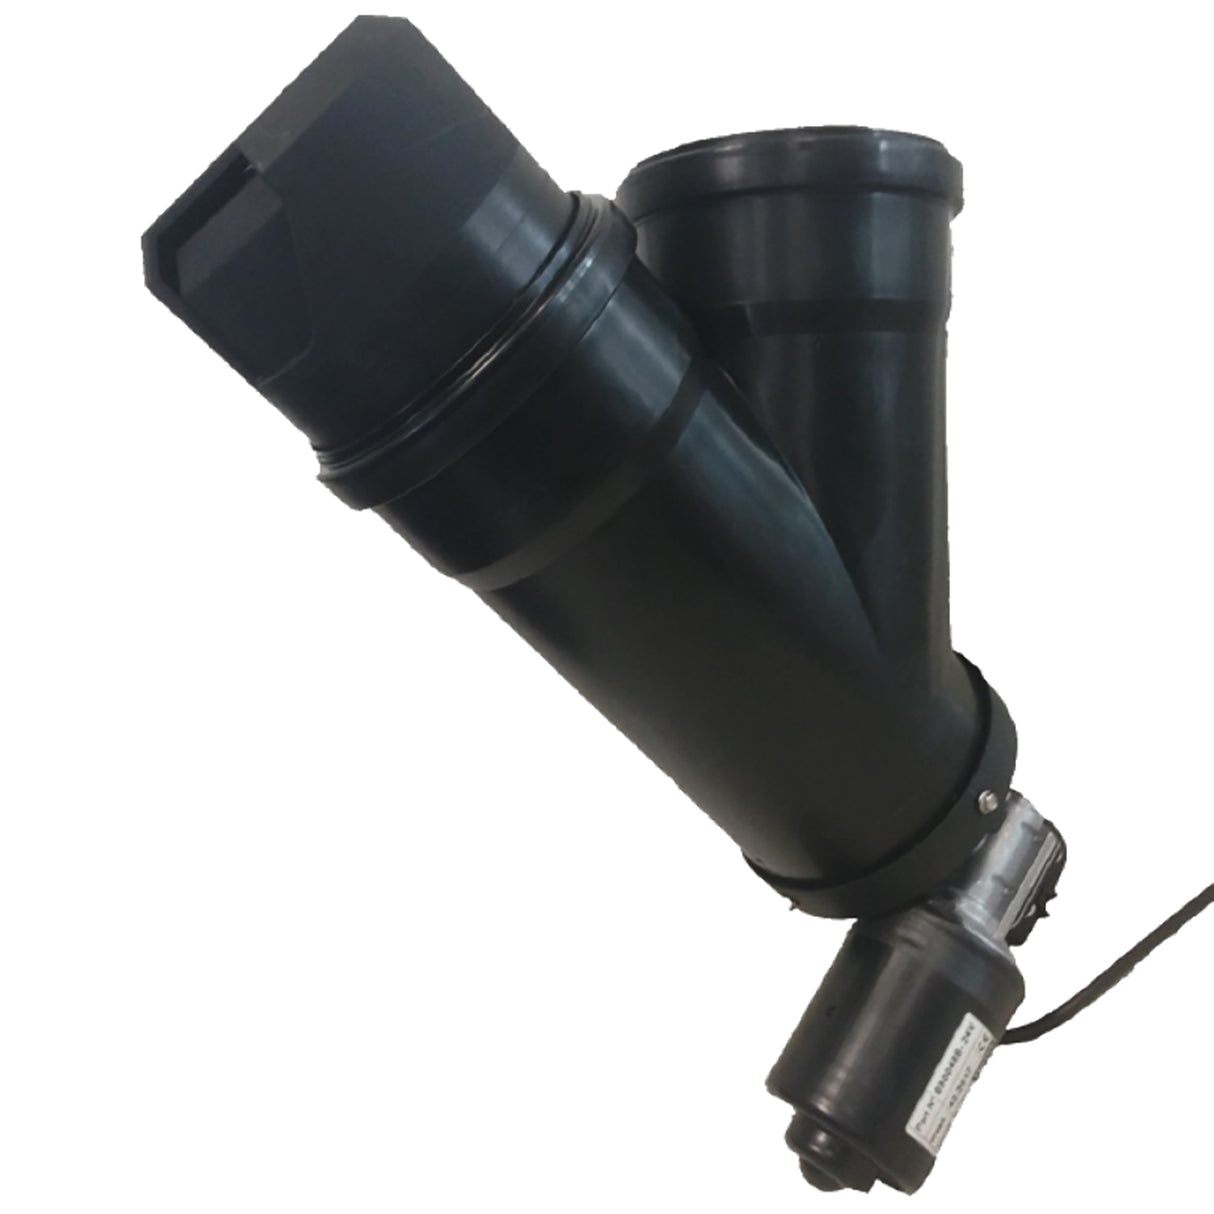 Black-V - The compact anti-spill feed dispenser 30 grams per portion